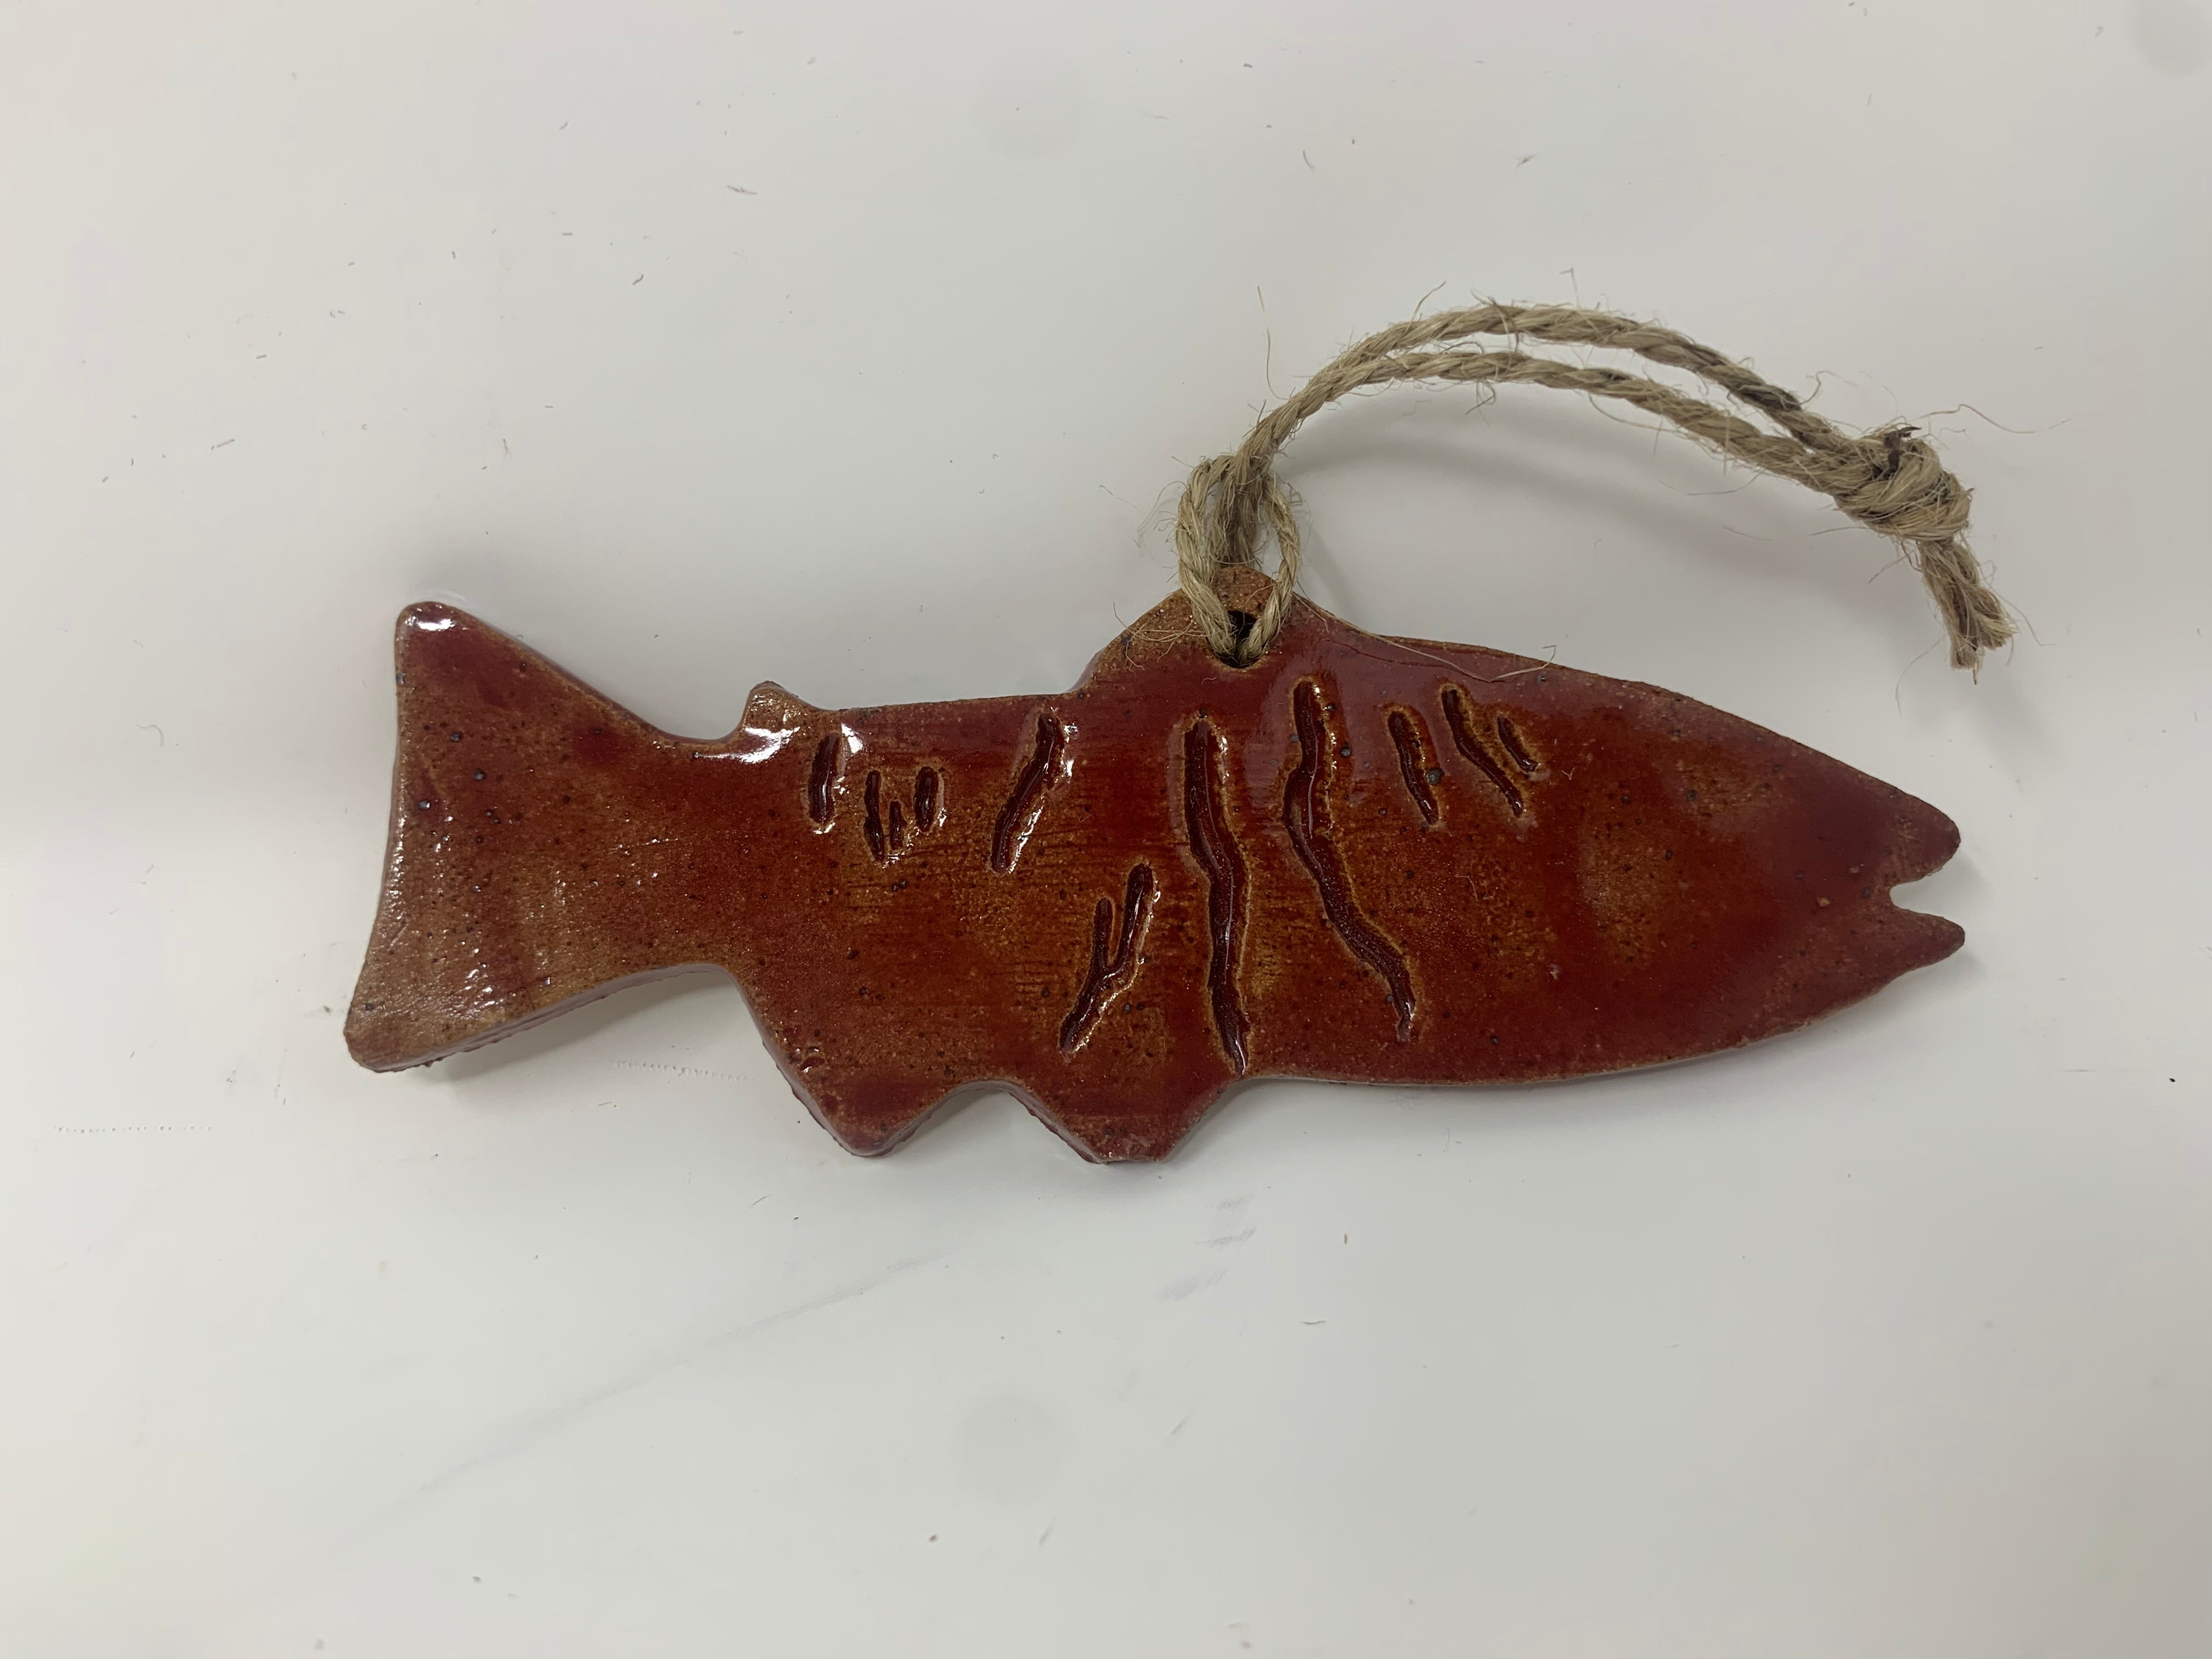 Finger Lakes Fish Pottery Ornaments